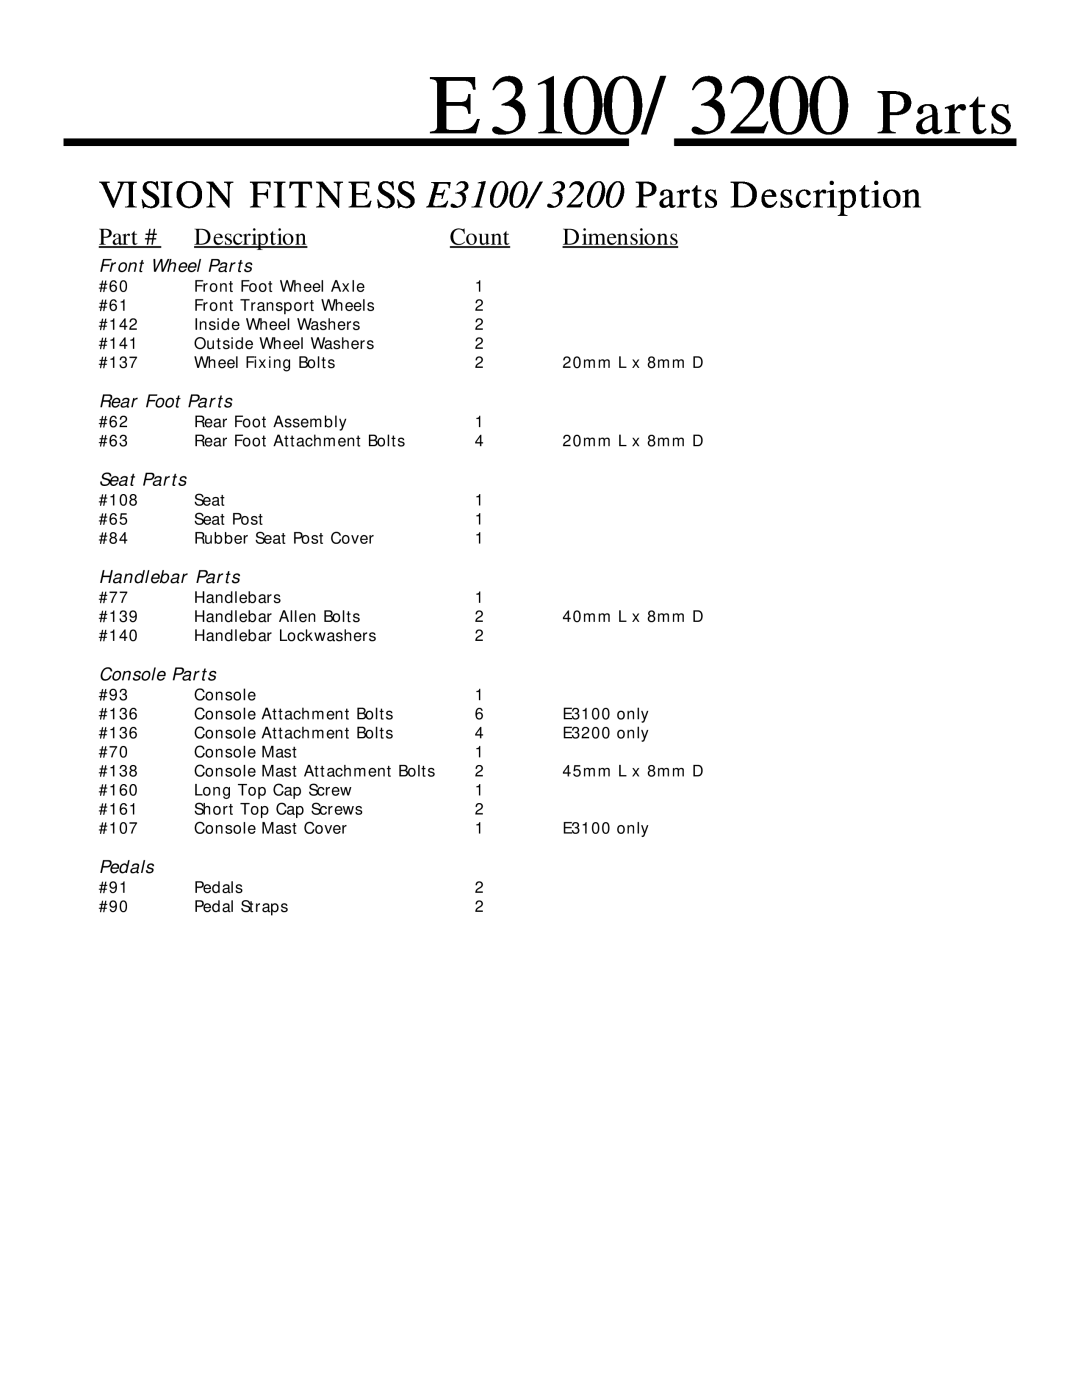 Vision Fitness VISION FITNESS E3100/3200 Parts Description, Dimensions, Count, Front Wheel Parts, Rear Foot Parts 